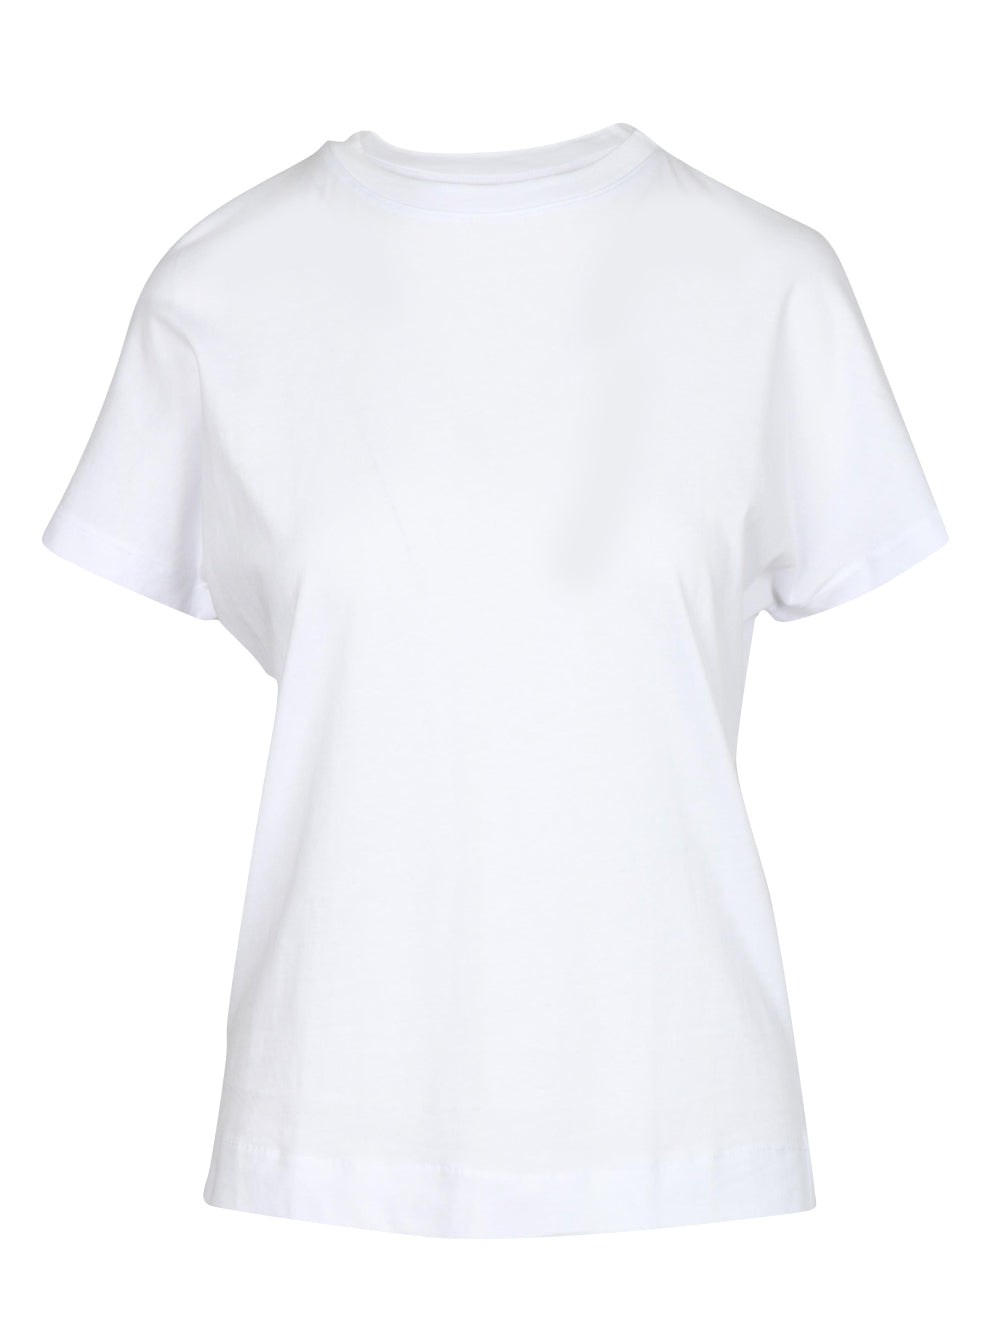 MERCI T-Shirt Girocollo in Cotone Bianca con Logo Bianco